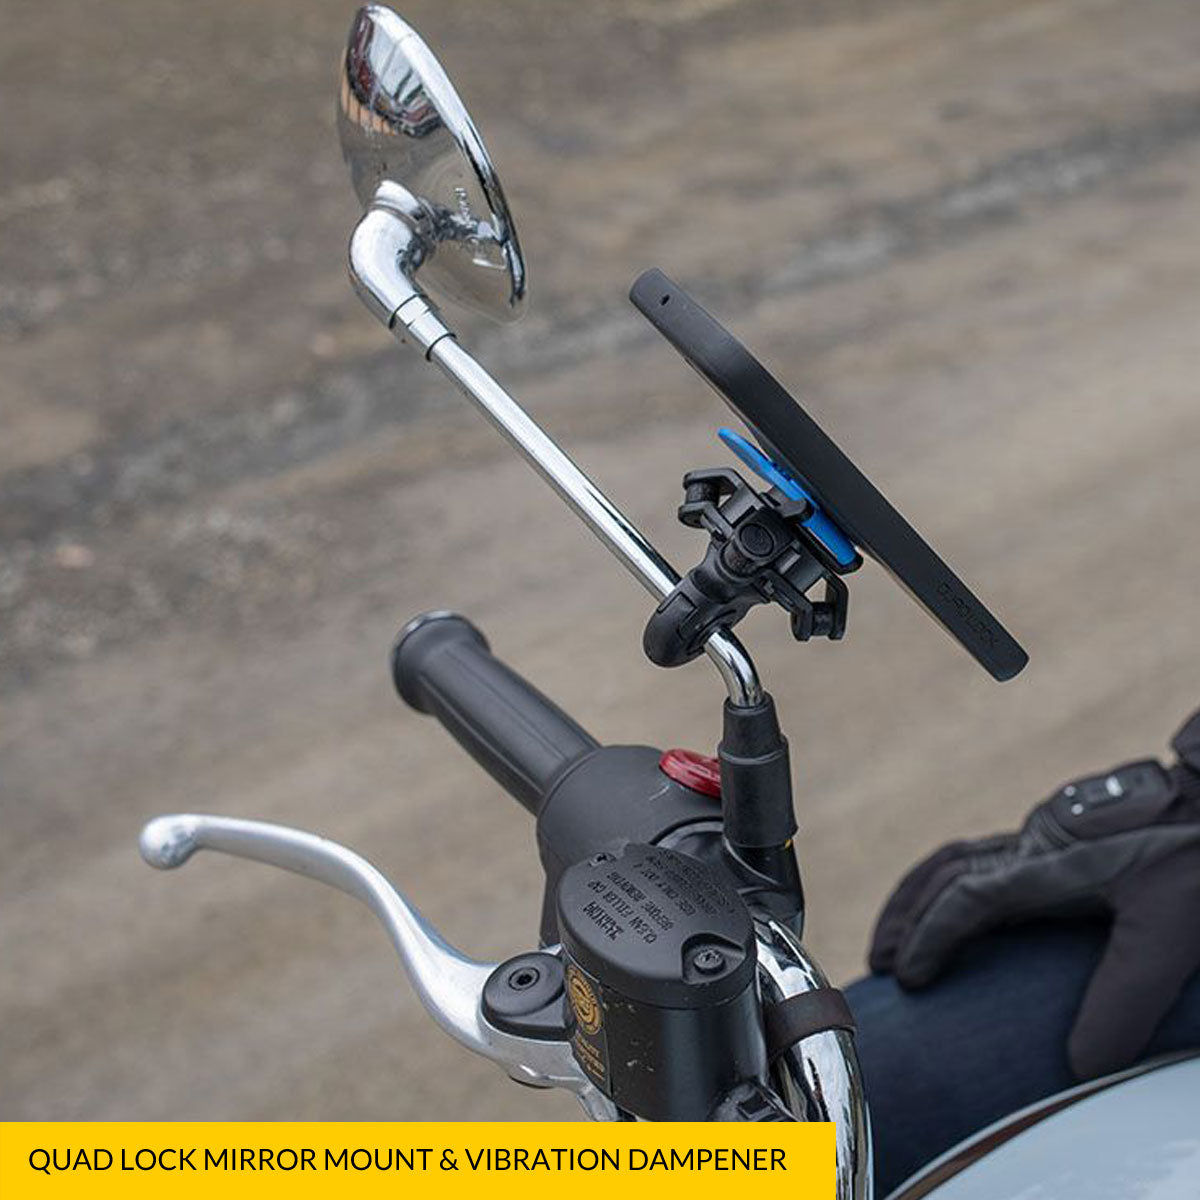 Quad Lock Motorcycle Mirror Mount - FREE UK DELIVERY